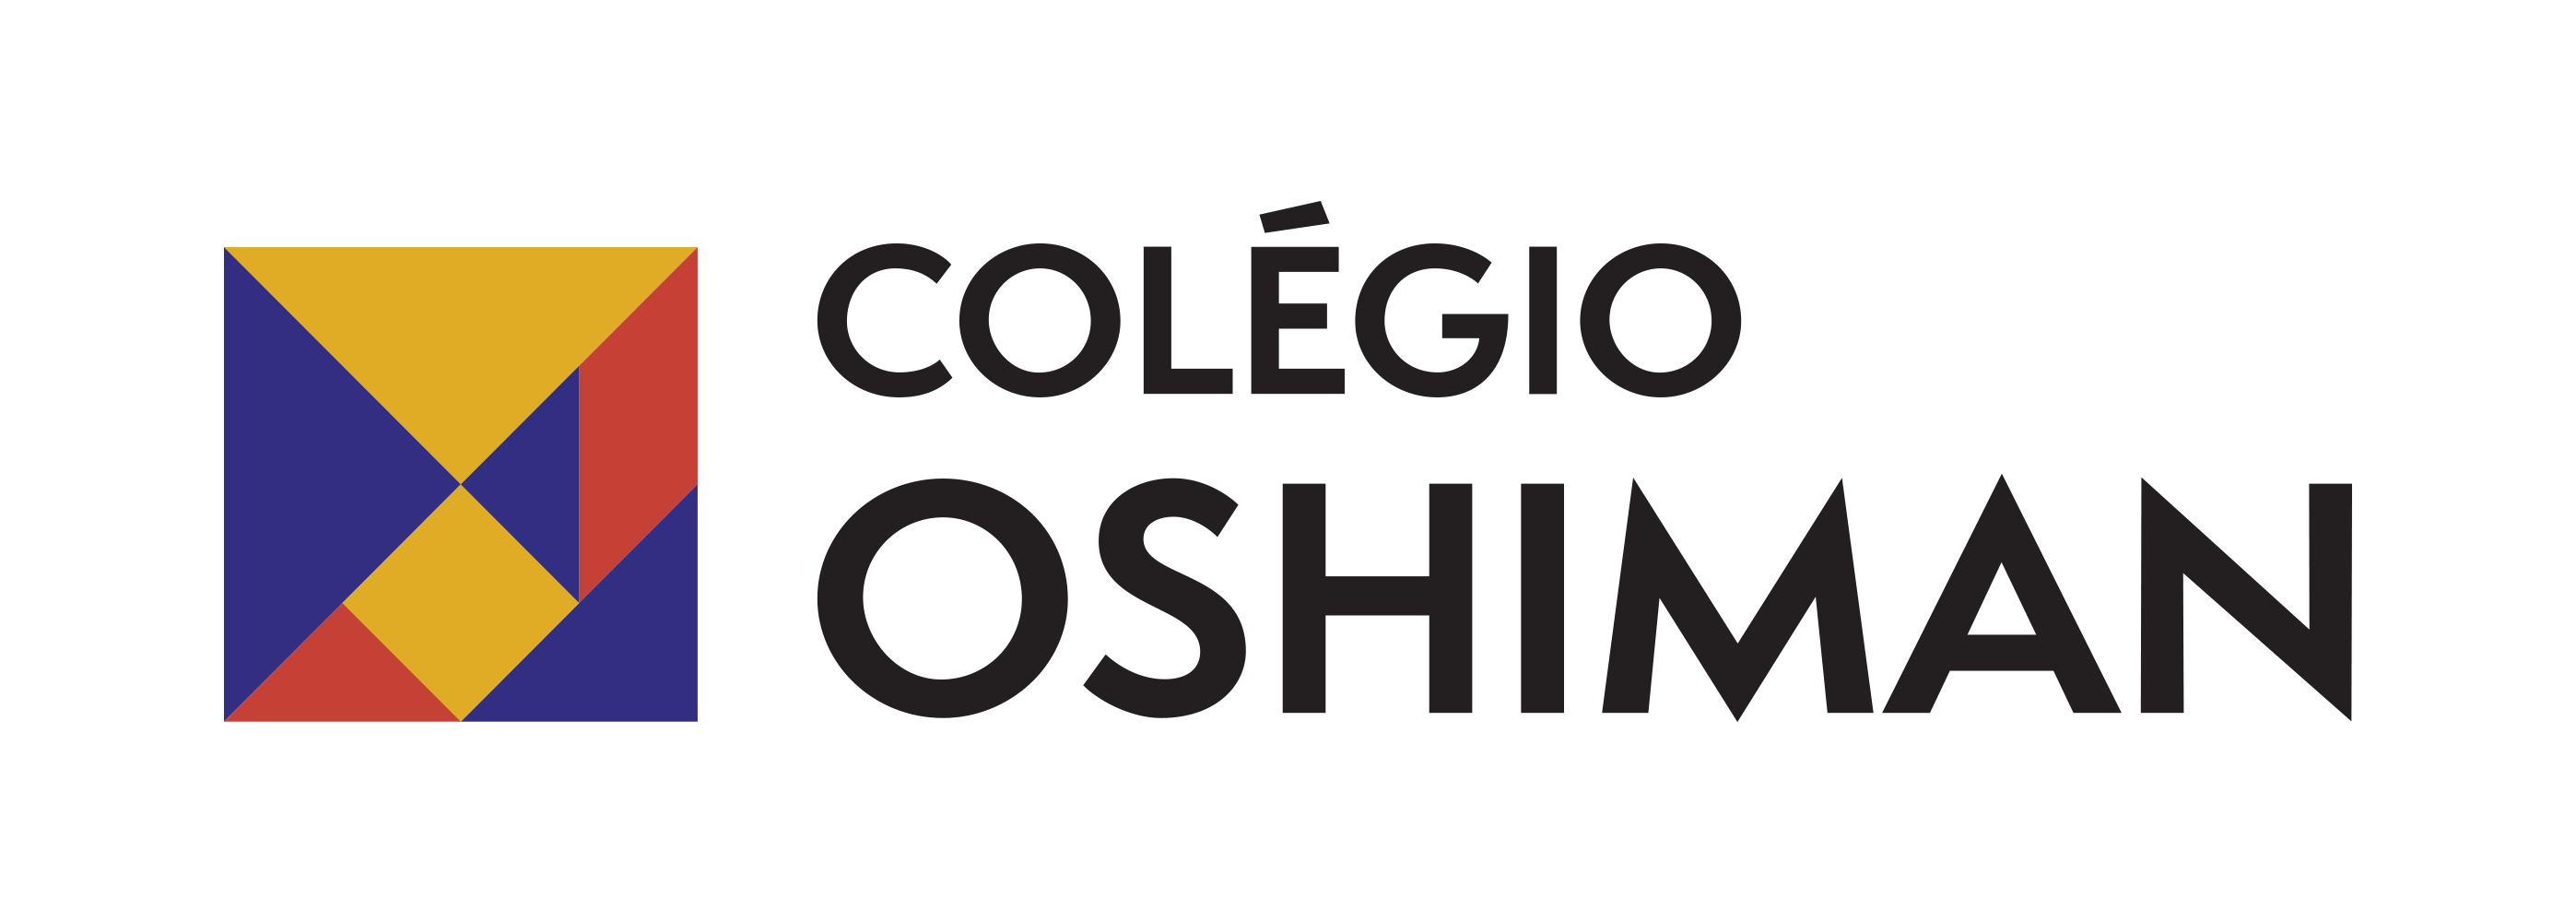 Colégio Oshiman